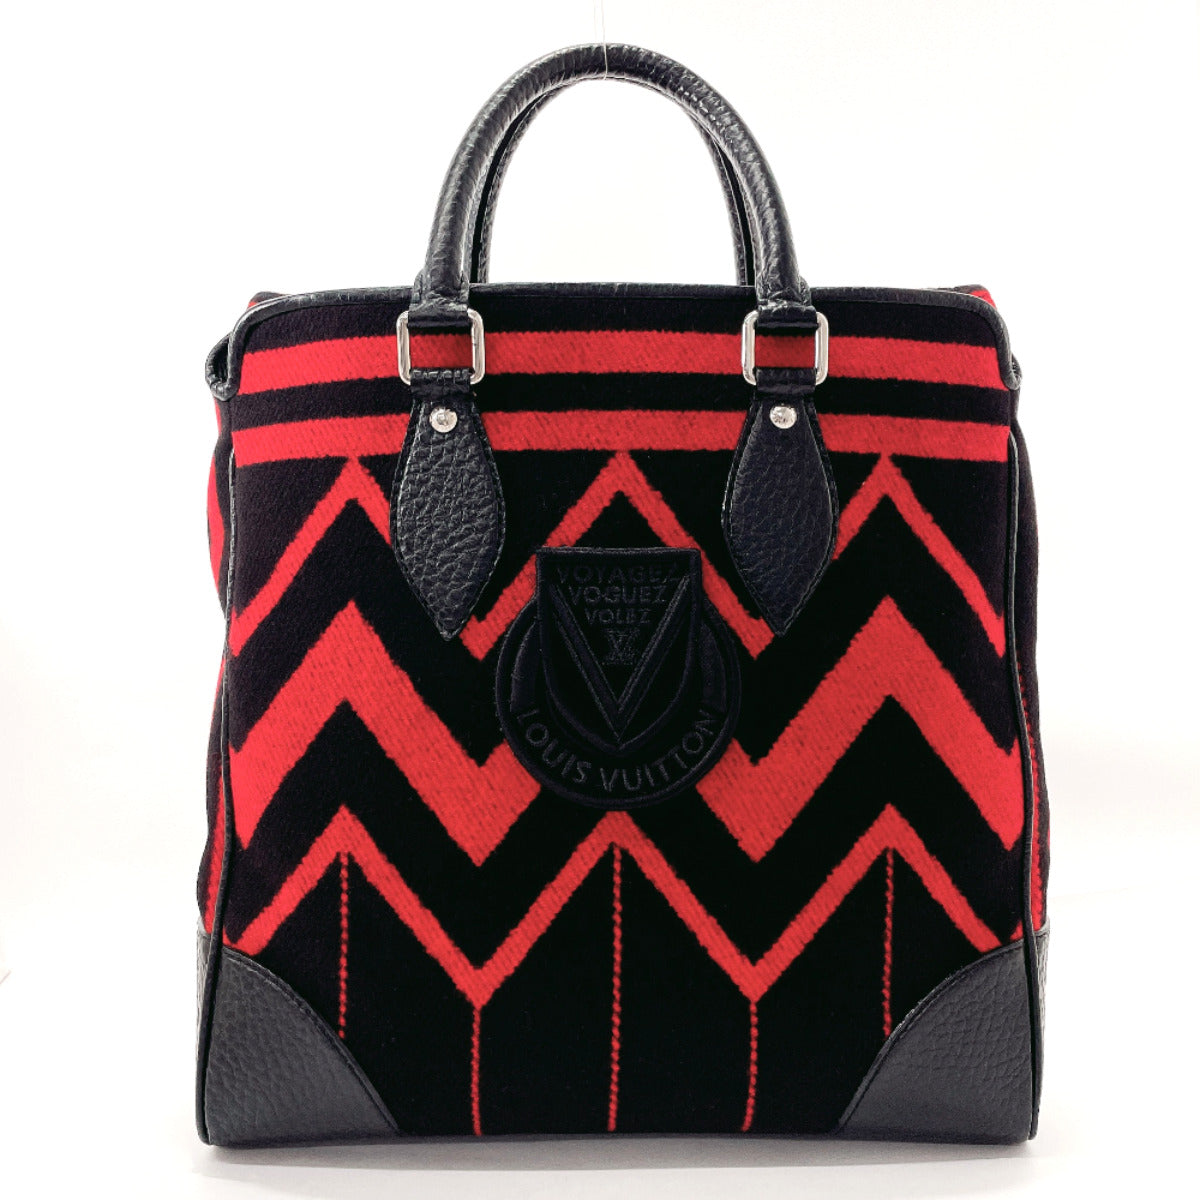 louis vuitton black and red handbag